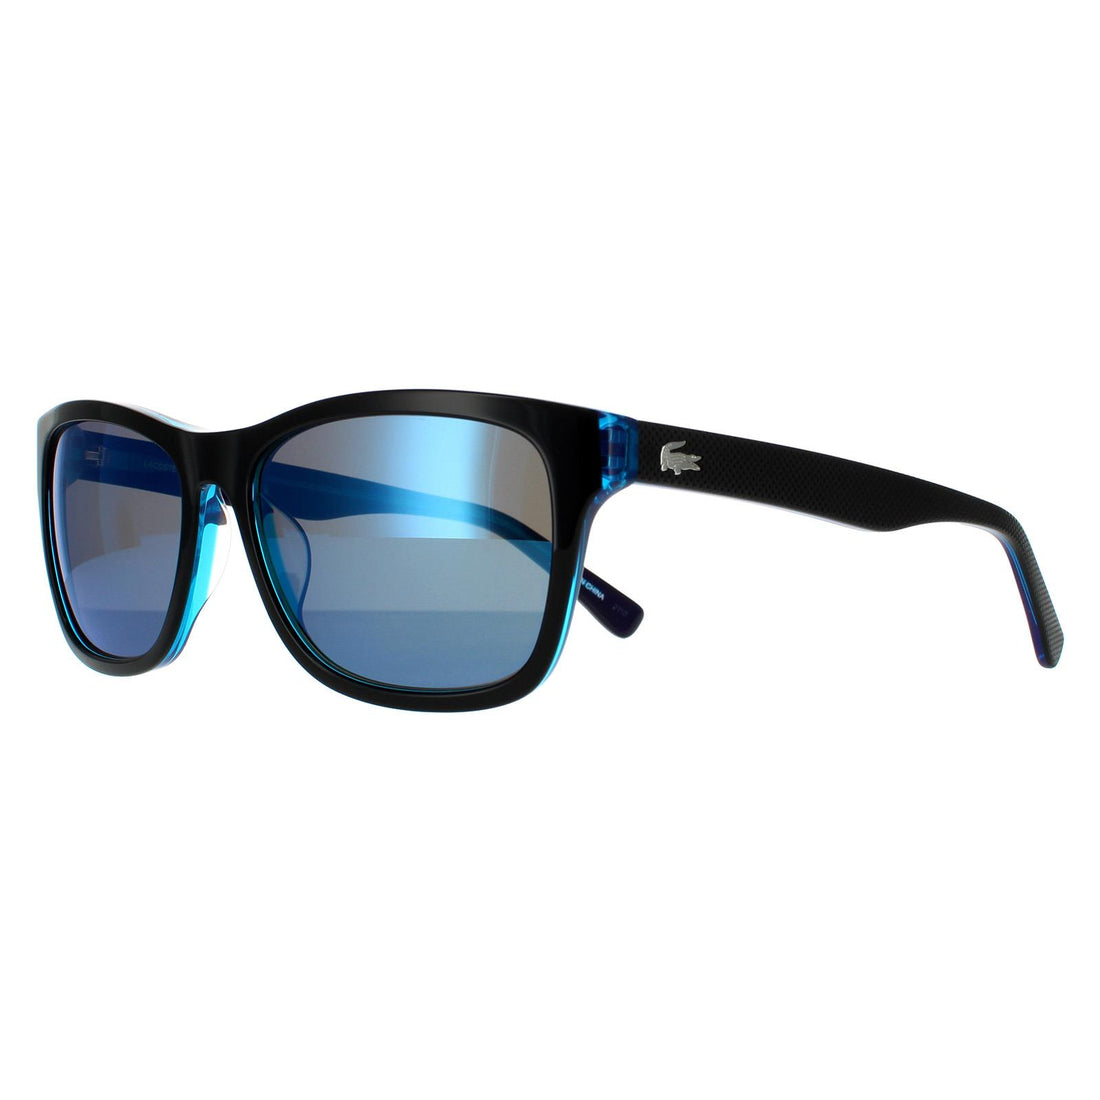 Lacoste Sunglasses L683S 002 Black Blue